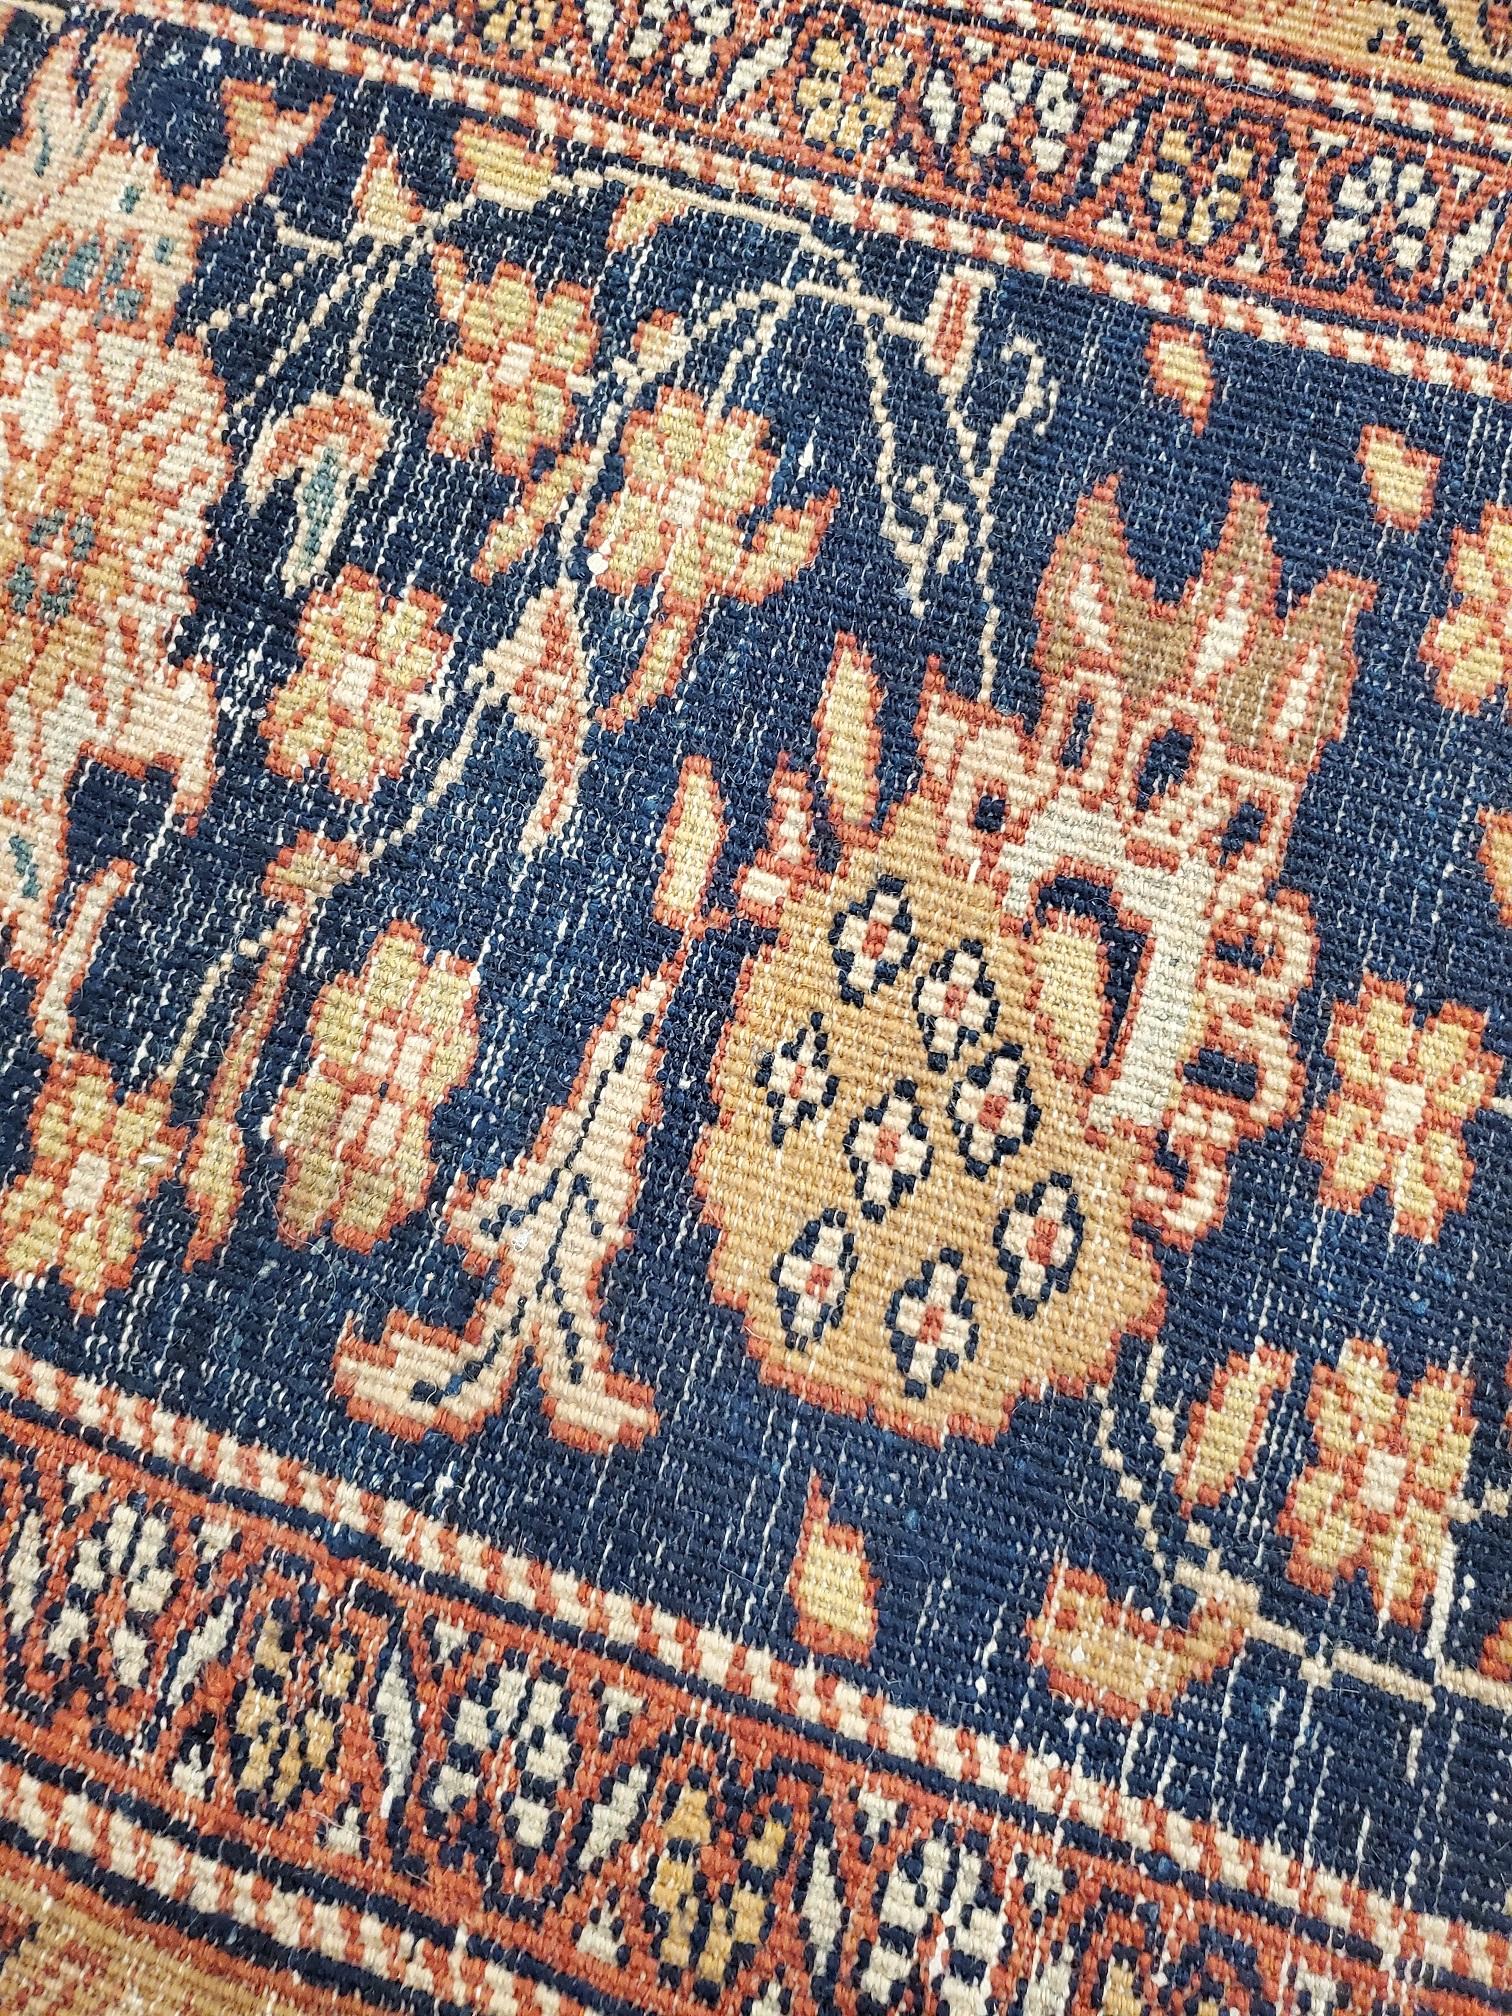 19th Century Antique Farahan Sarouk Carpet, Handmade Oriental Rug, Ivory, Red, Navy, Fine  For Sale